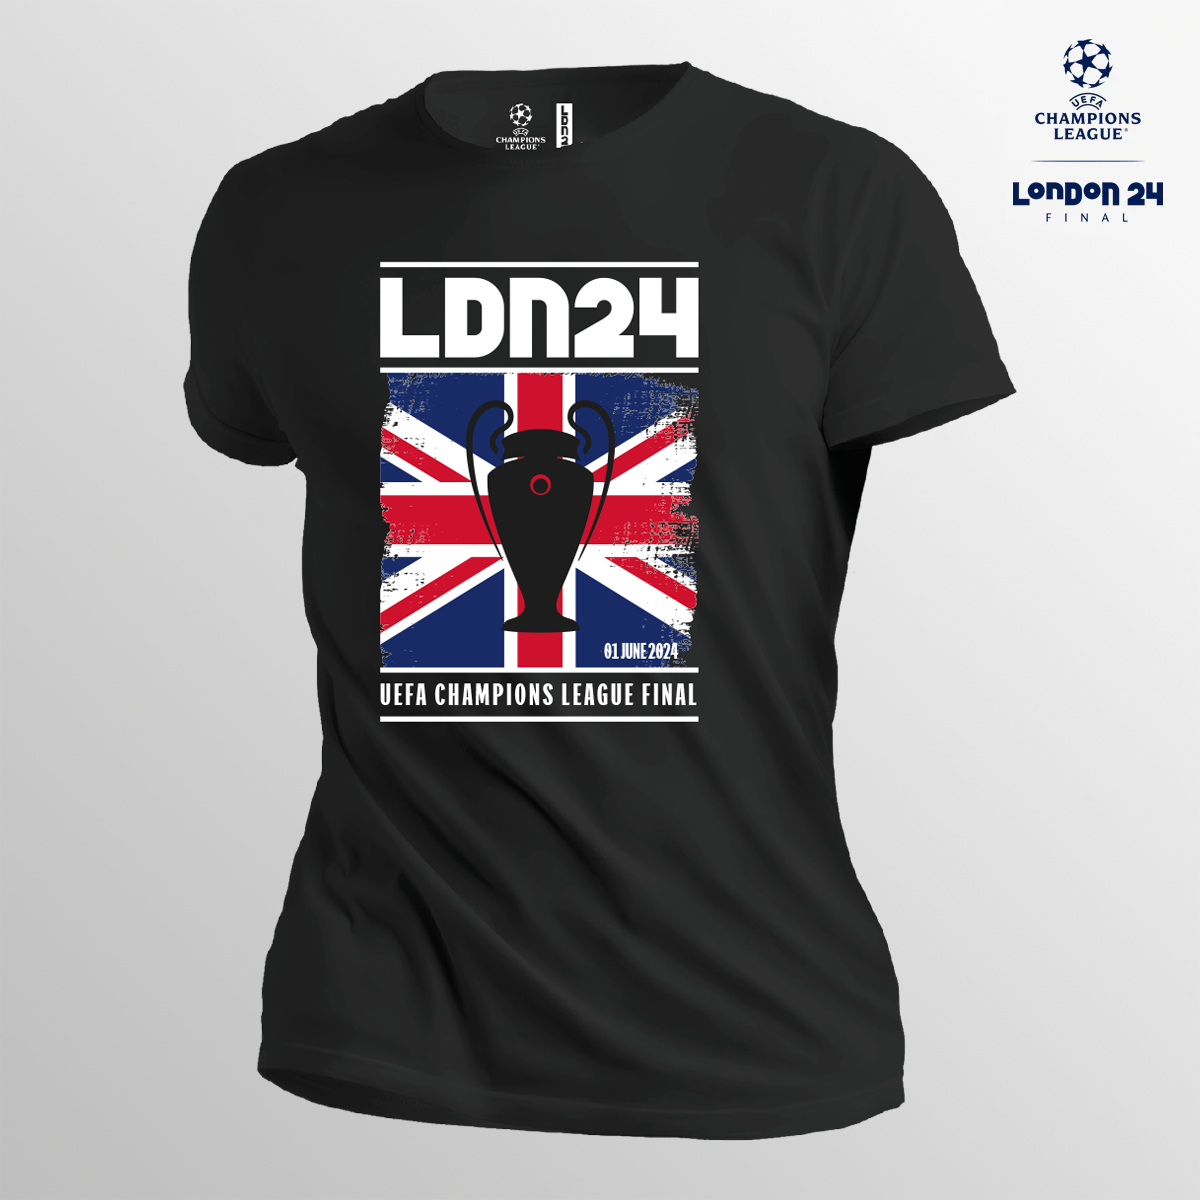 London 24 UCL Final Event T-shirt - Black